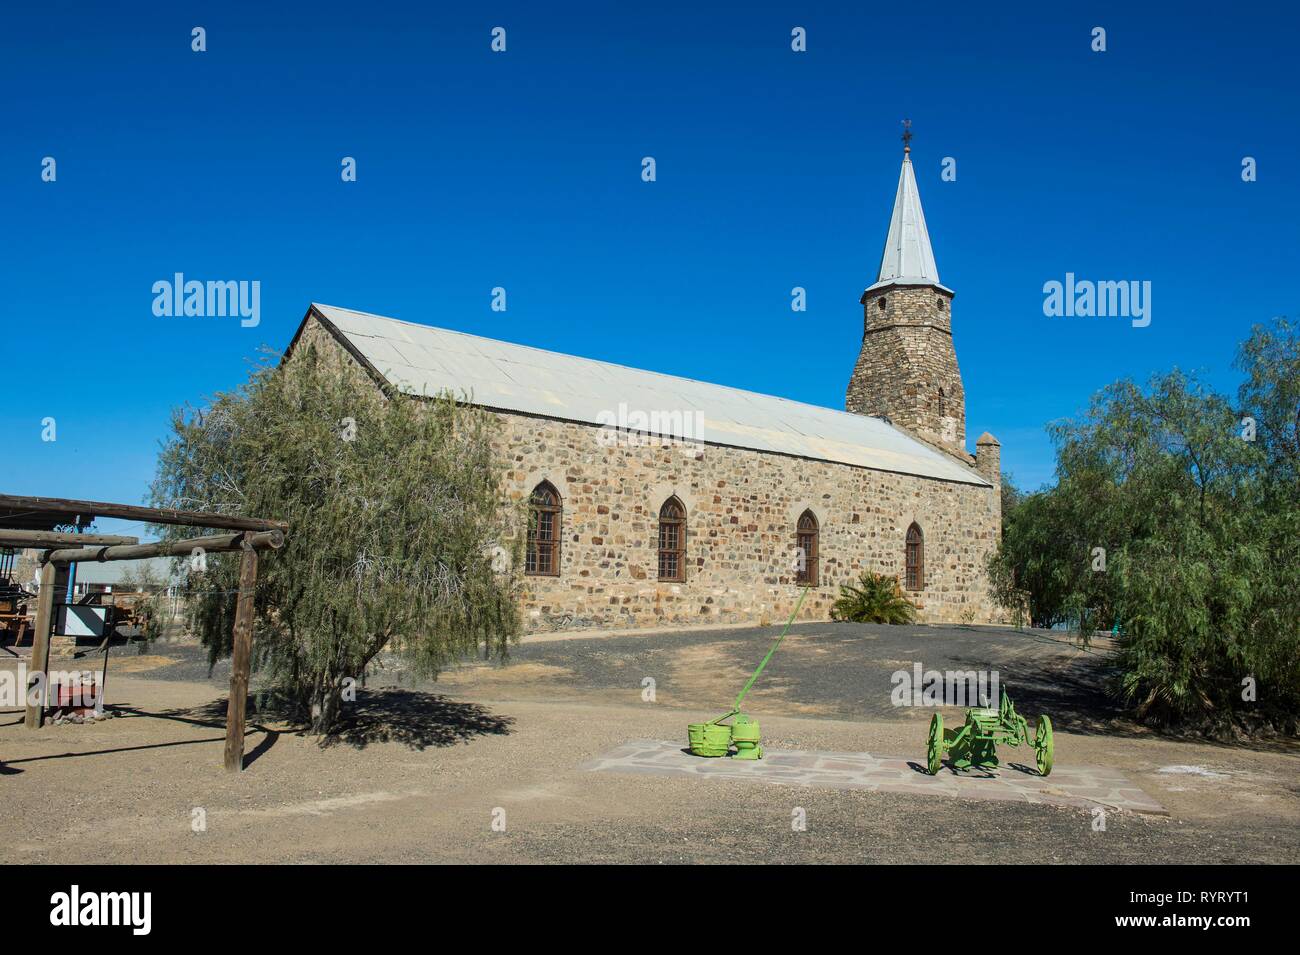 Vecchia chiesa tedesca dal periodo coloniale, Ketmanshoop, Namibia Foto Stock